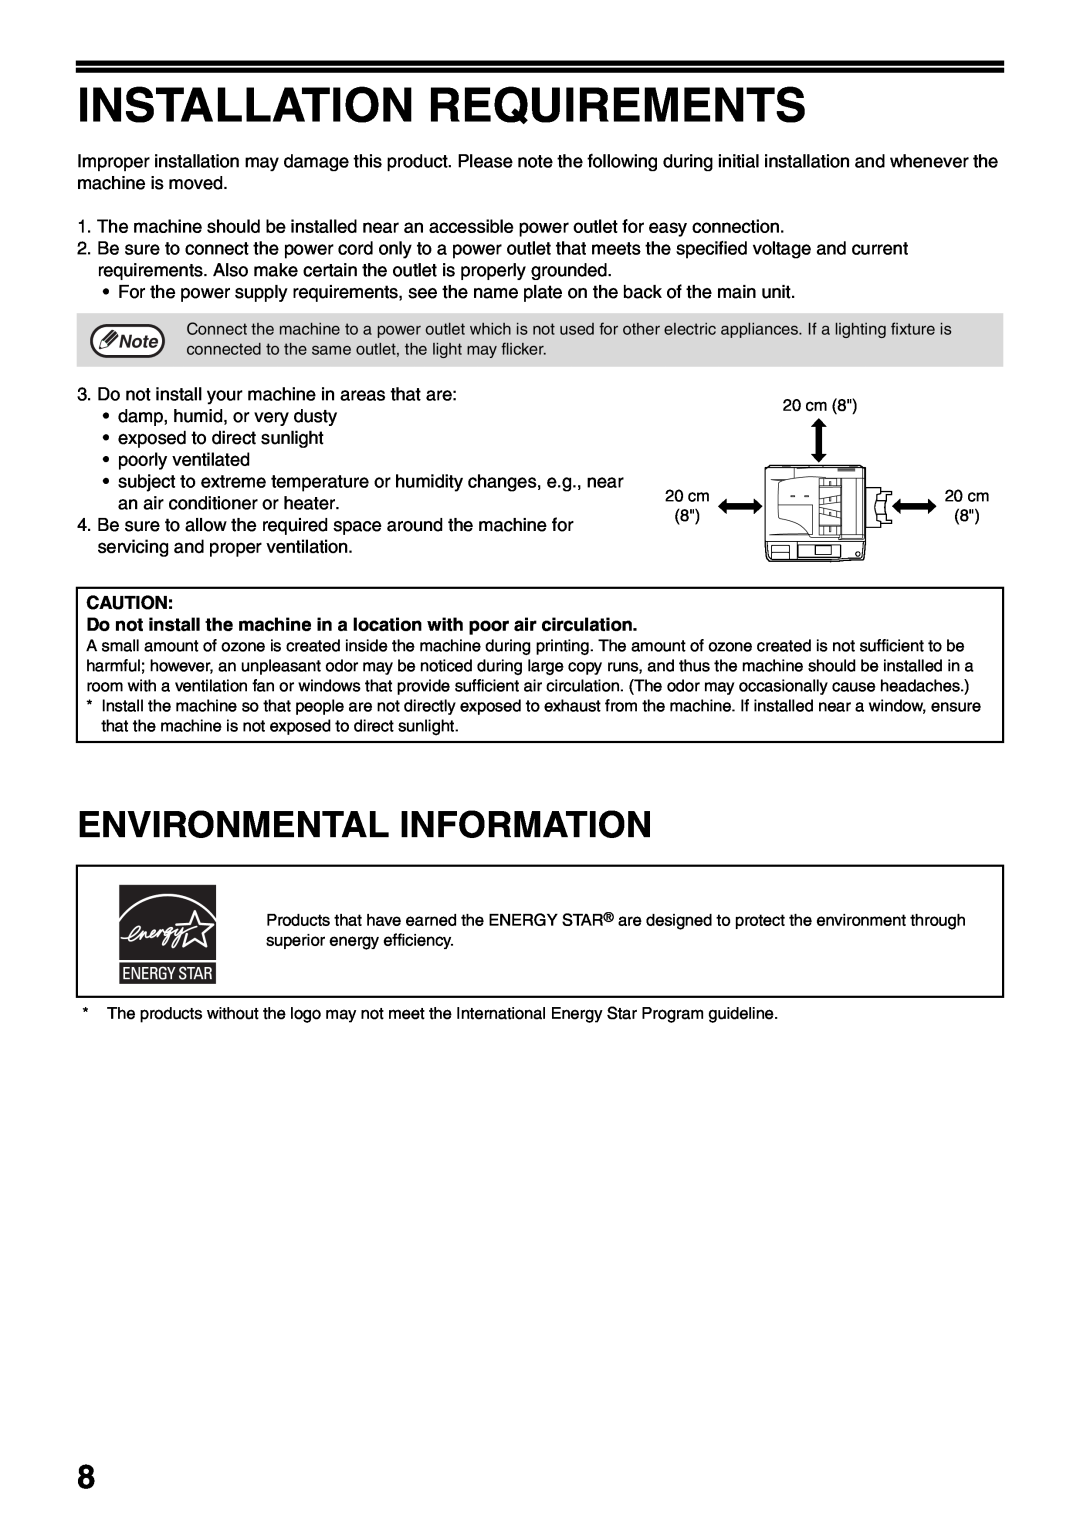 Sharp MX-M160D, MX-M200D operation manual Installation Requirements, Environmental Information 